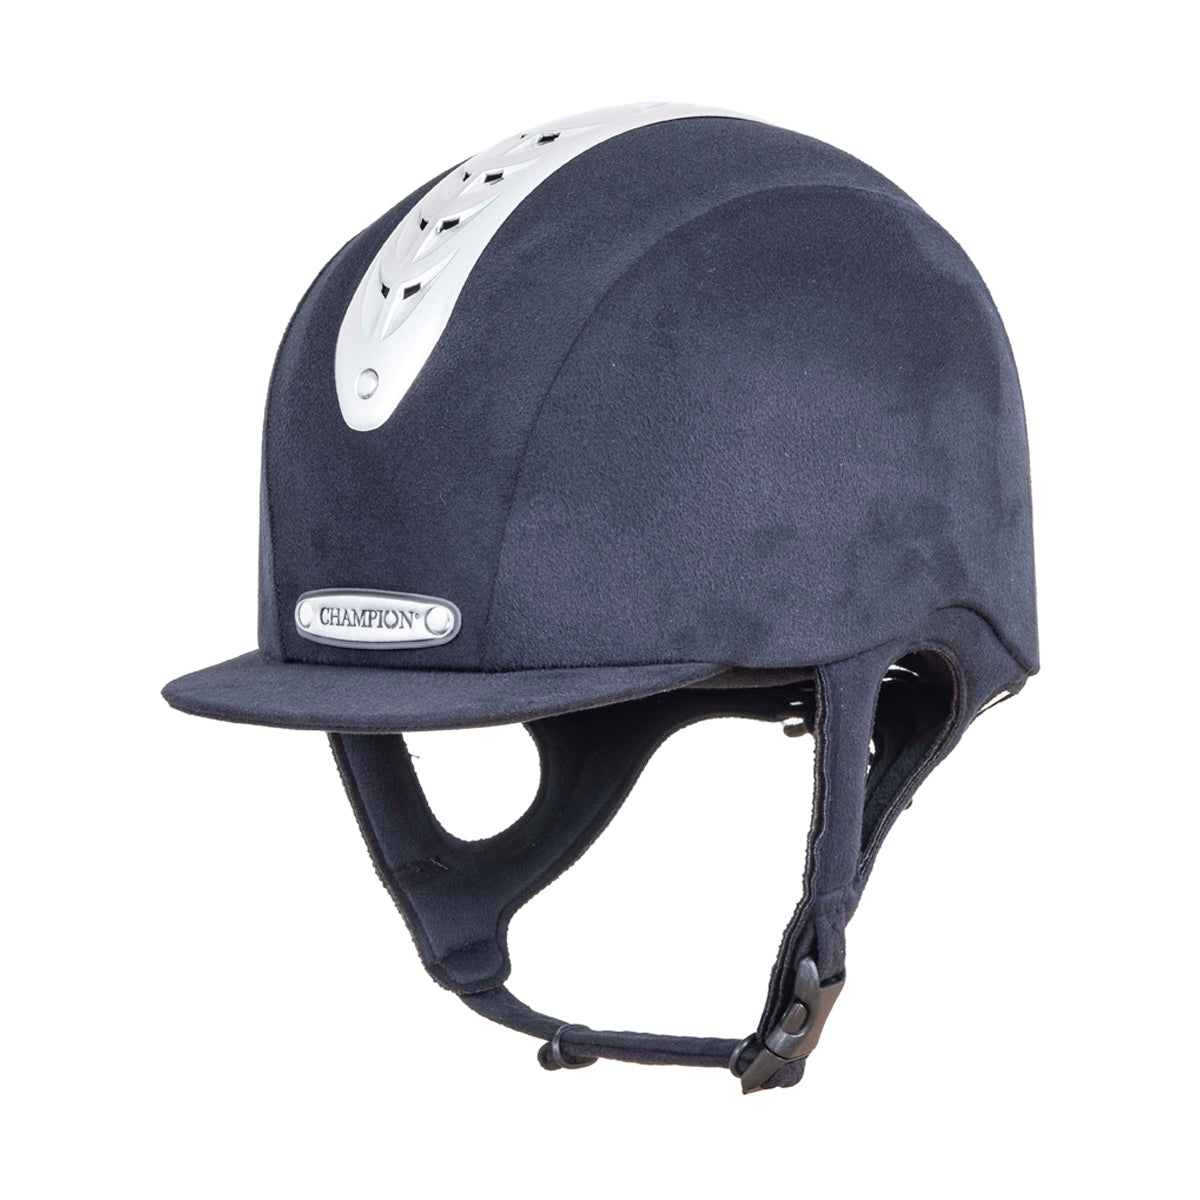 Champion Revolve Junior X-Air Mips Peaked Helmet - Just Horse Riders